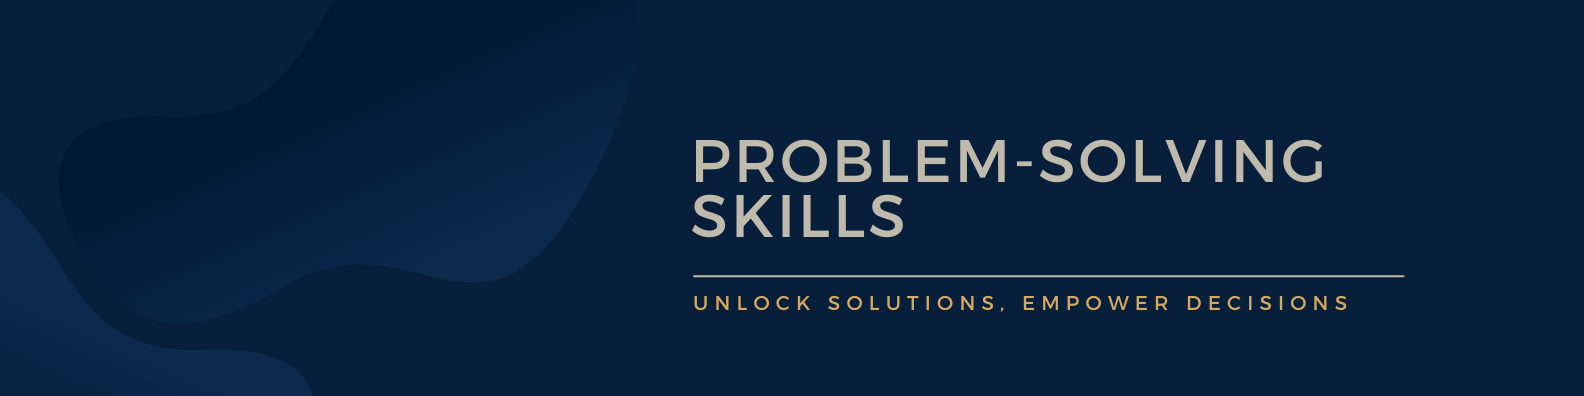 problem-solving skills banner 